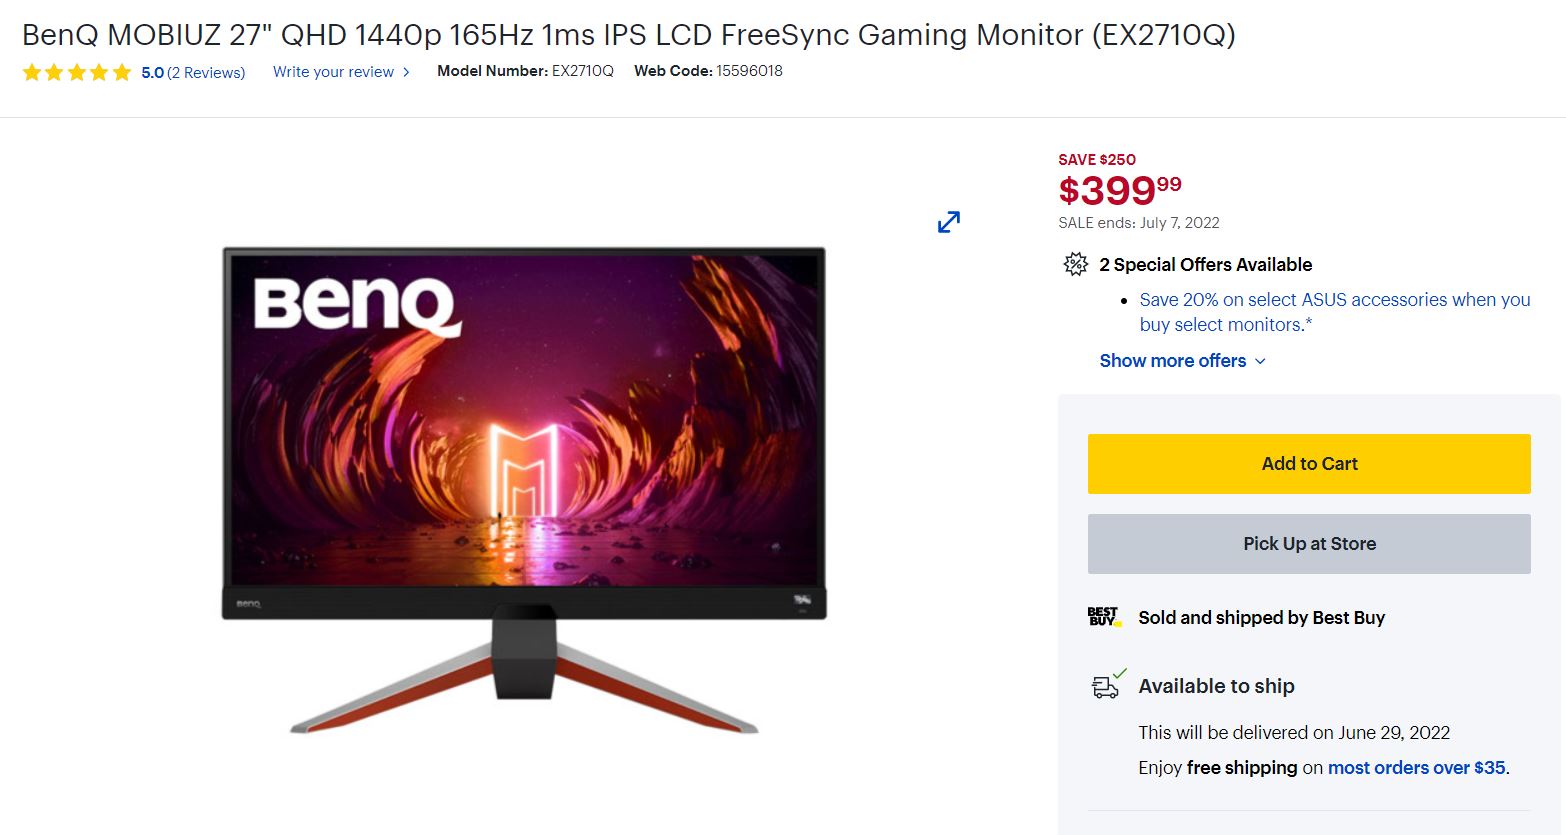 [$250 off on best buy.ca]BenQ MOBIUZ 27" QHD 1440p 165Hz 1ms IPS LCD FreeSync Gaming Monitor (EX2710Q) $399.99